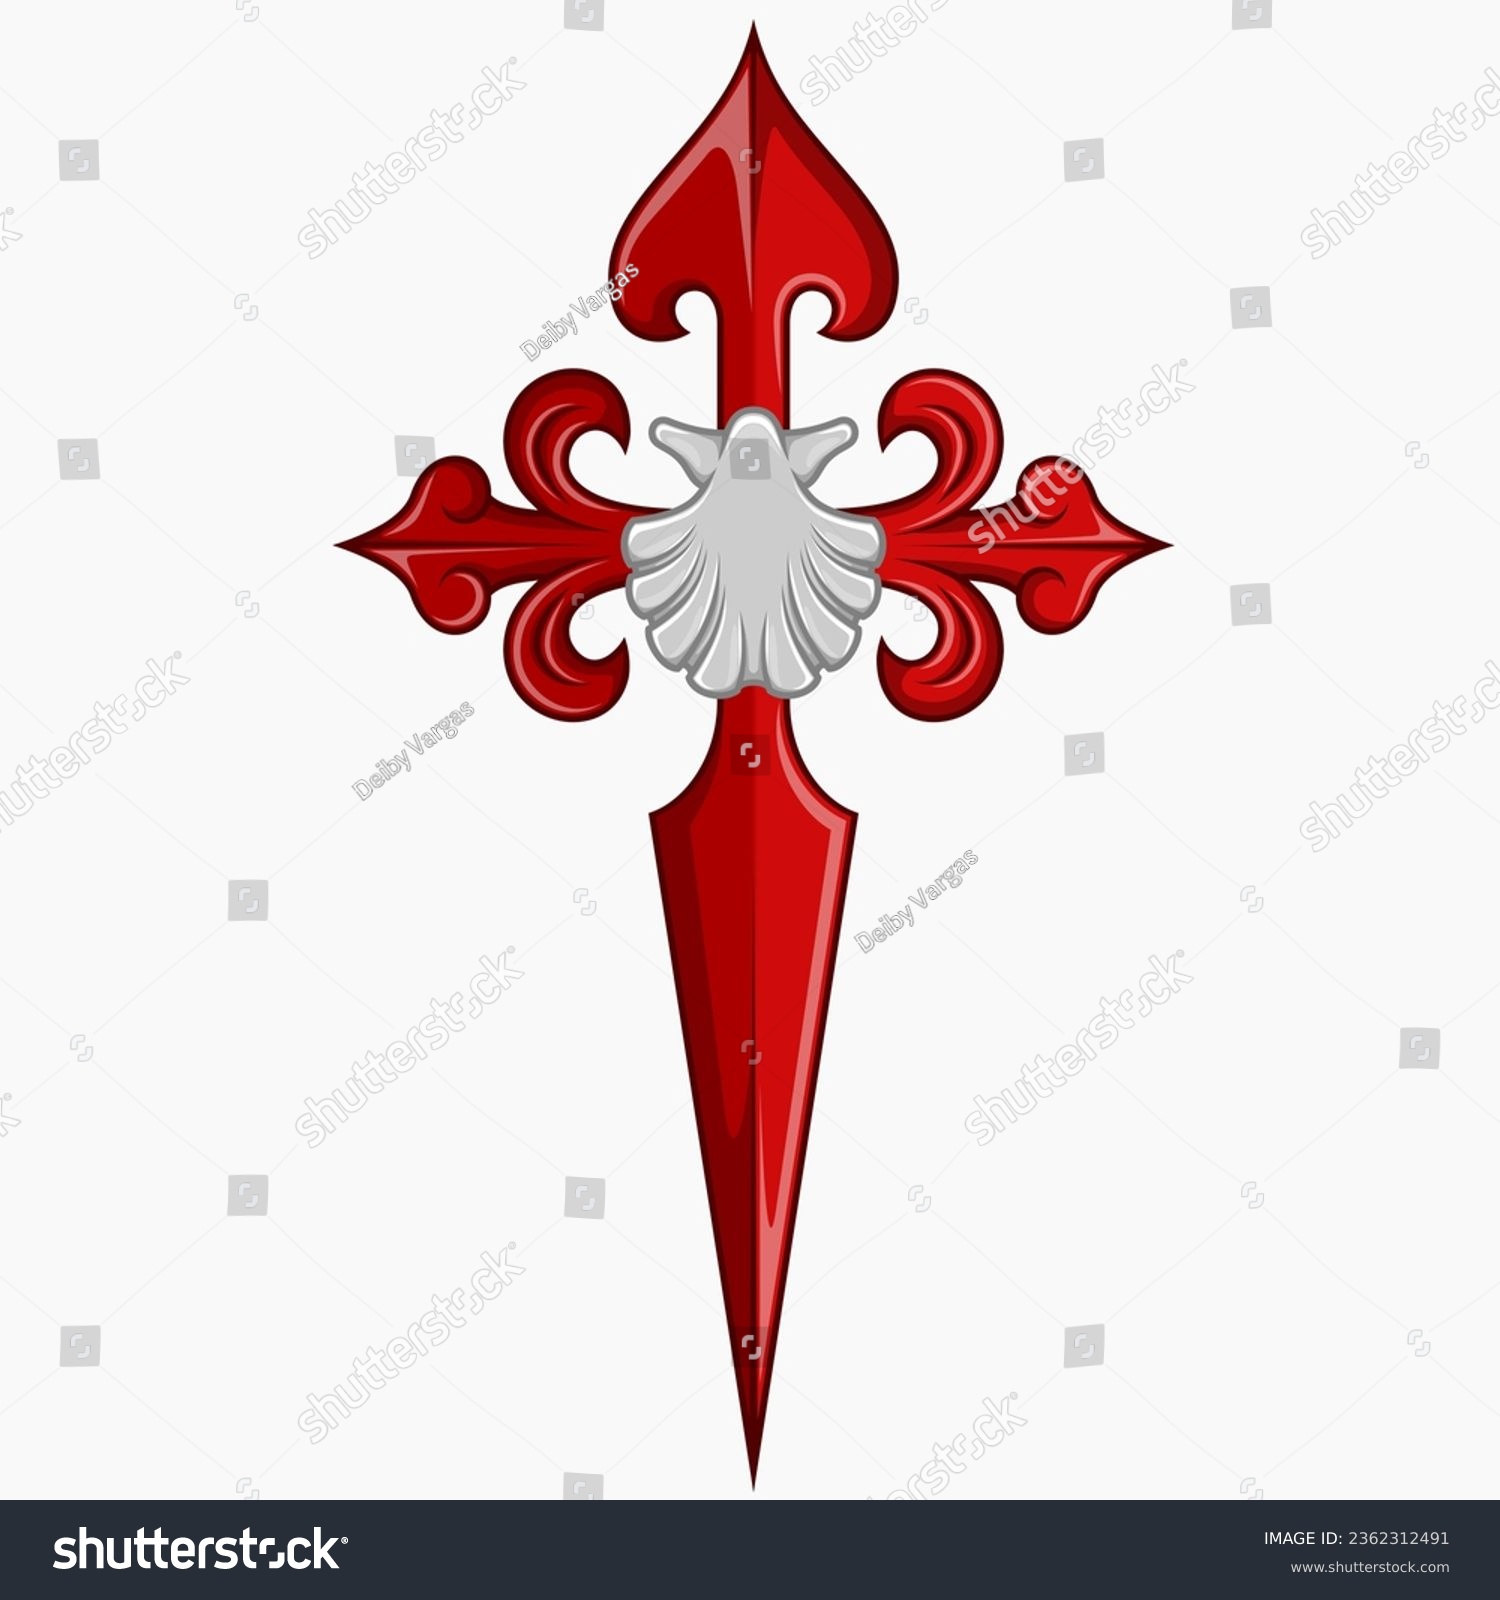 Vector design of christian symbology of the apostle santiago, Cross of the apostle Santiago with venera #2362312491